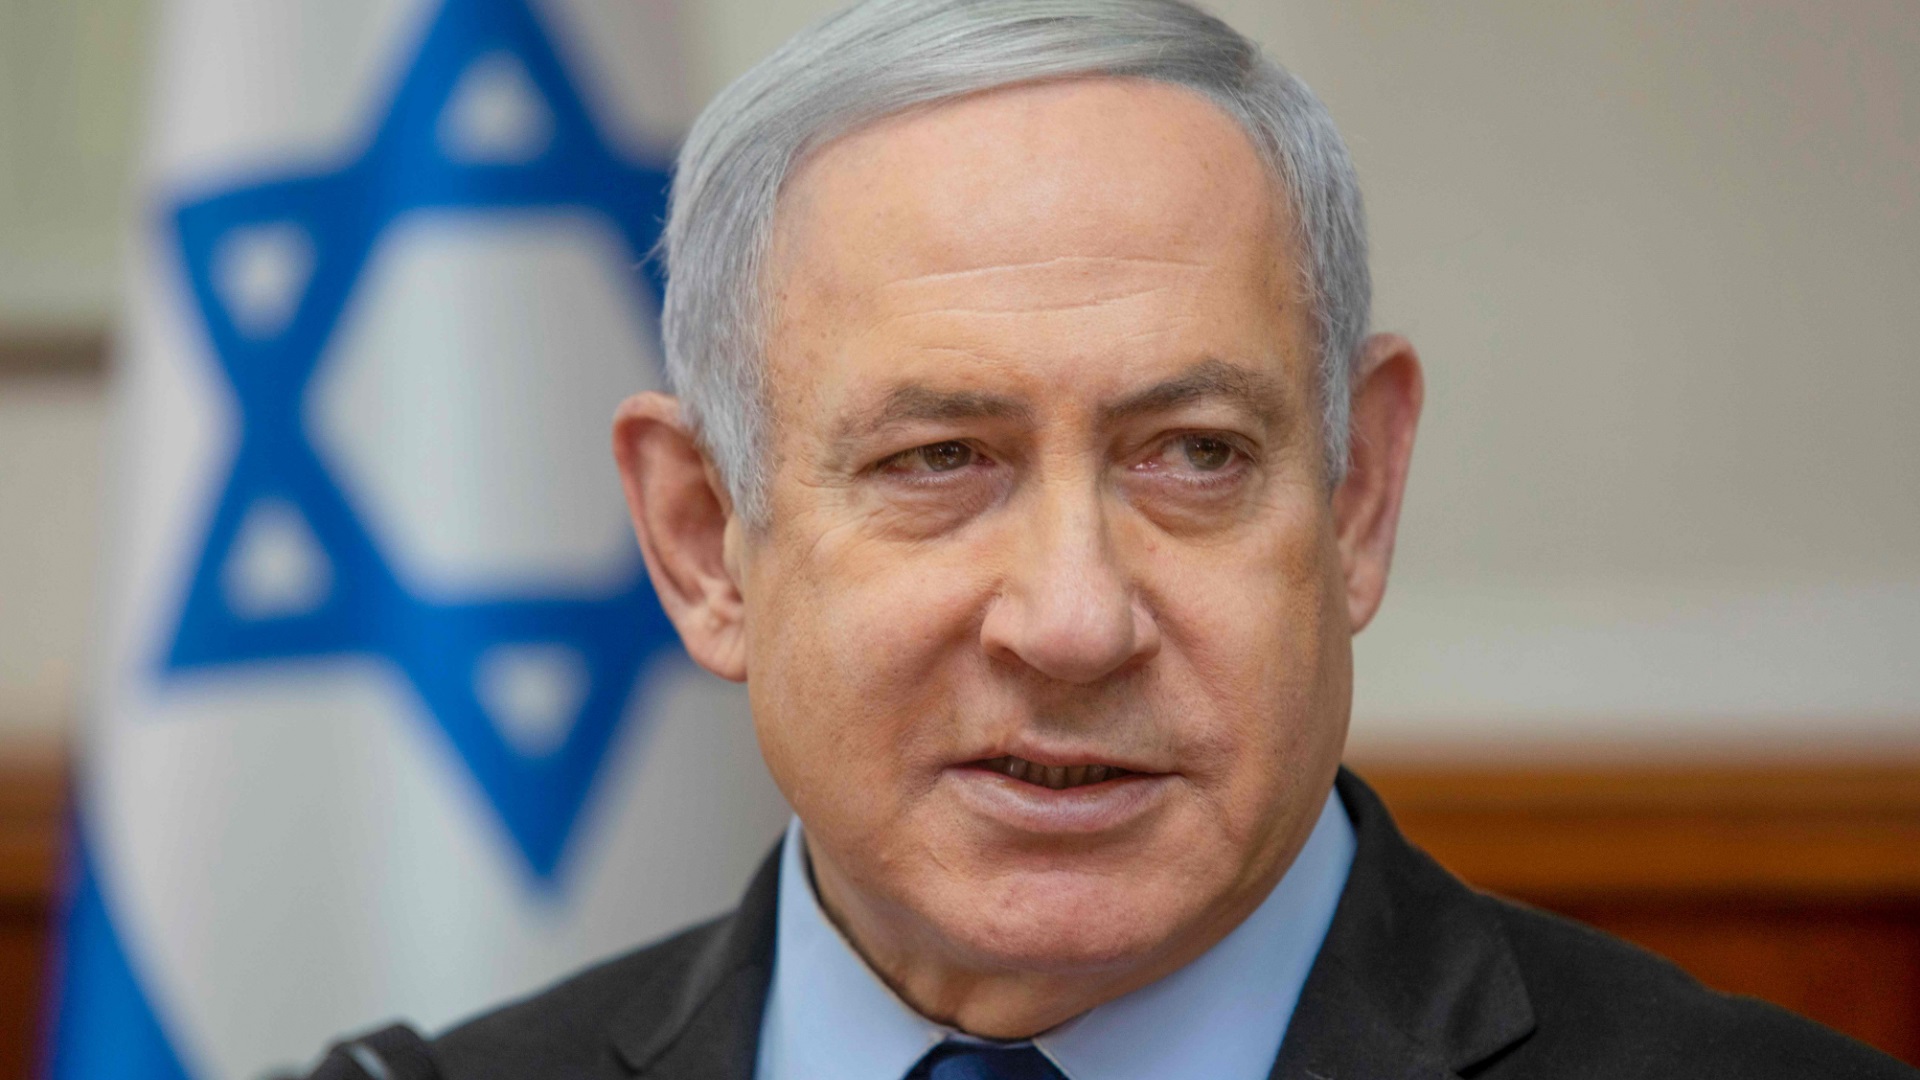 Video: Informe Semanal - Netanyahu en la encrucijada